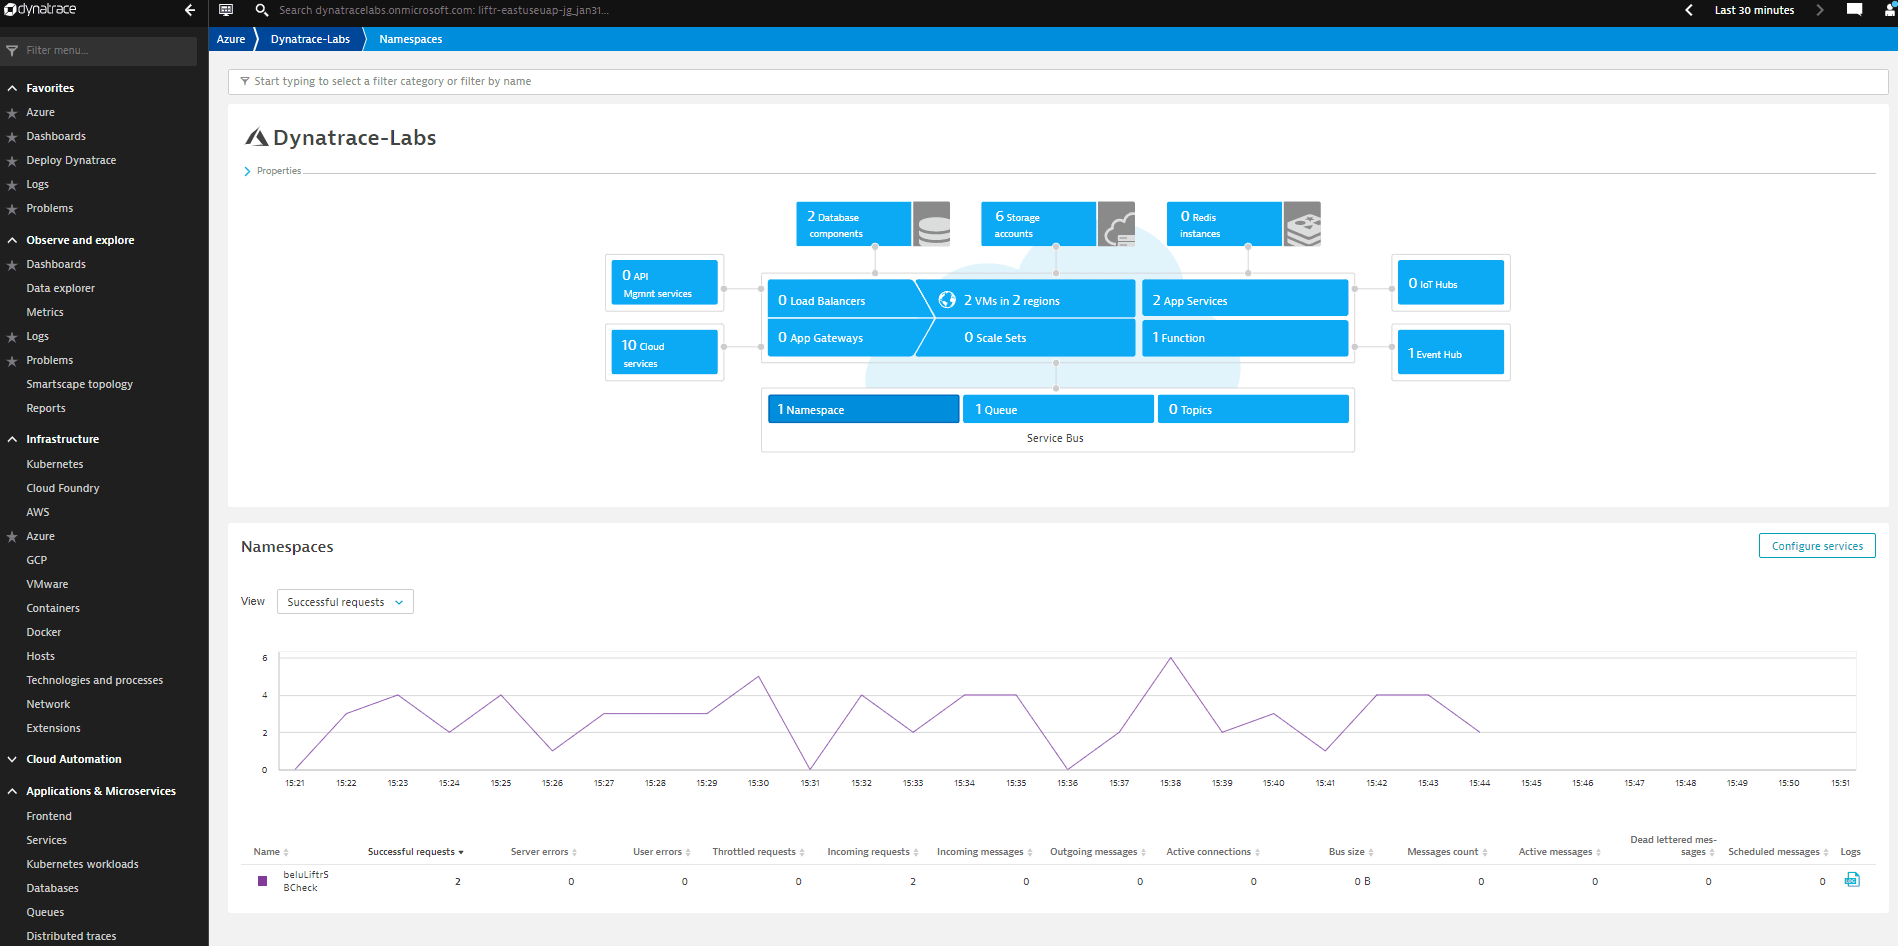 Azure monitor integration in Dynatrace